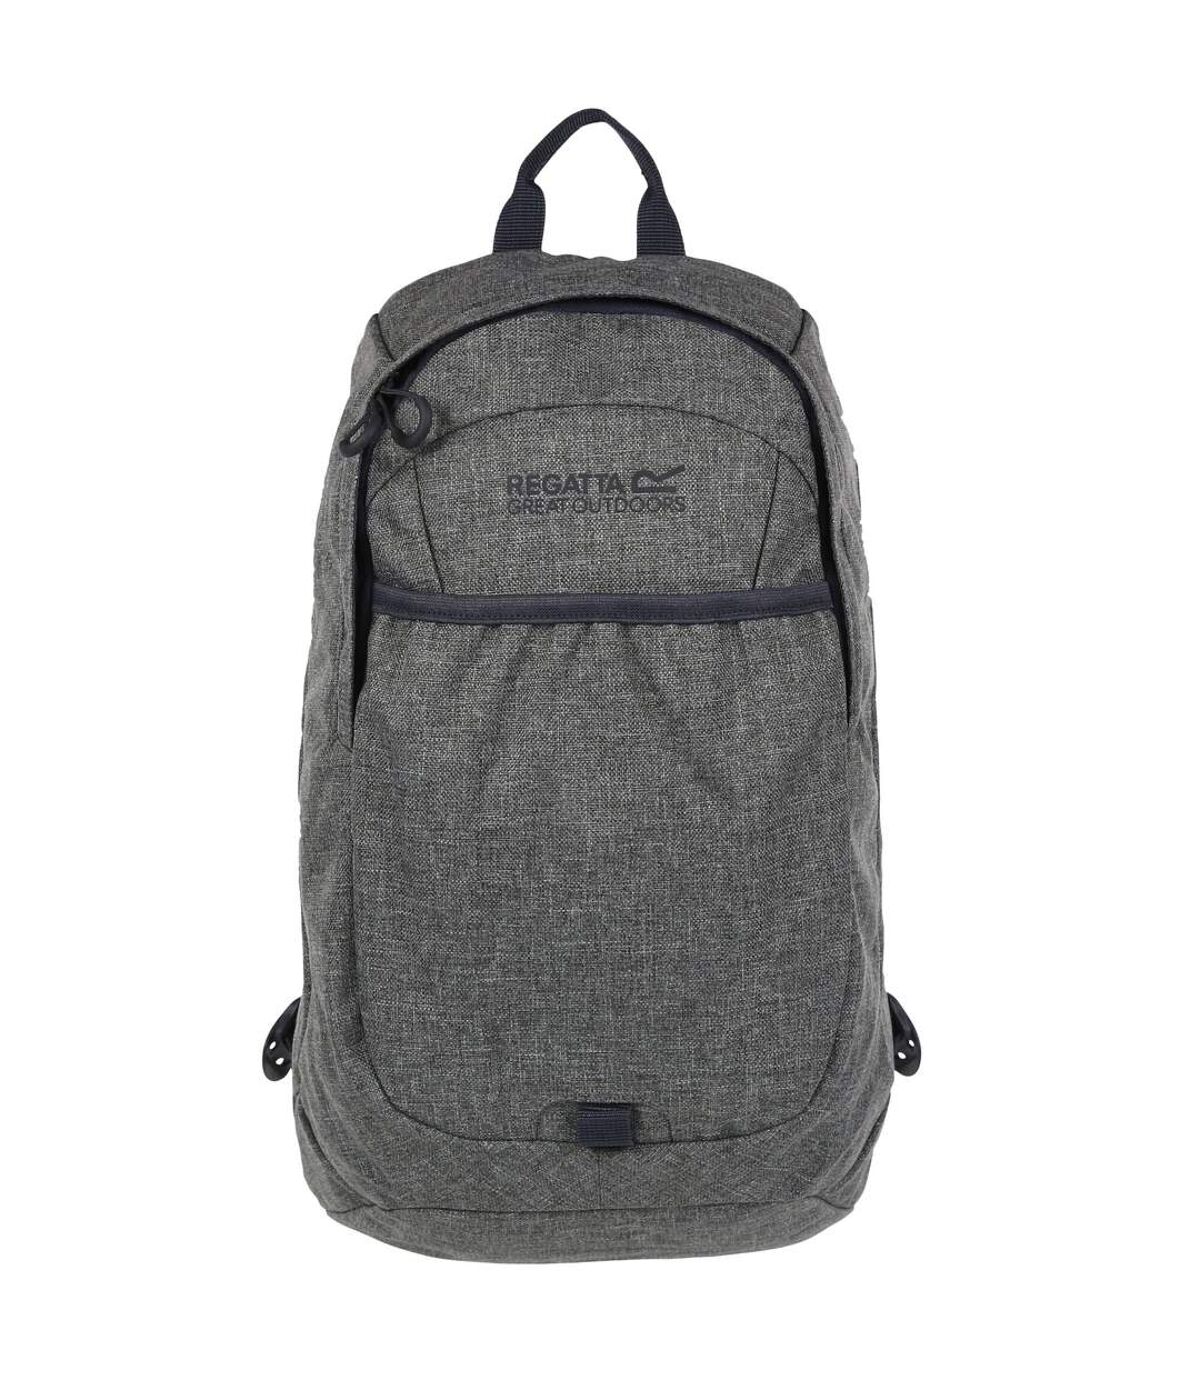 Regatta 4 Gallon Bedabase II Backpack (Gray Marl) (One Size)